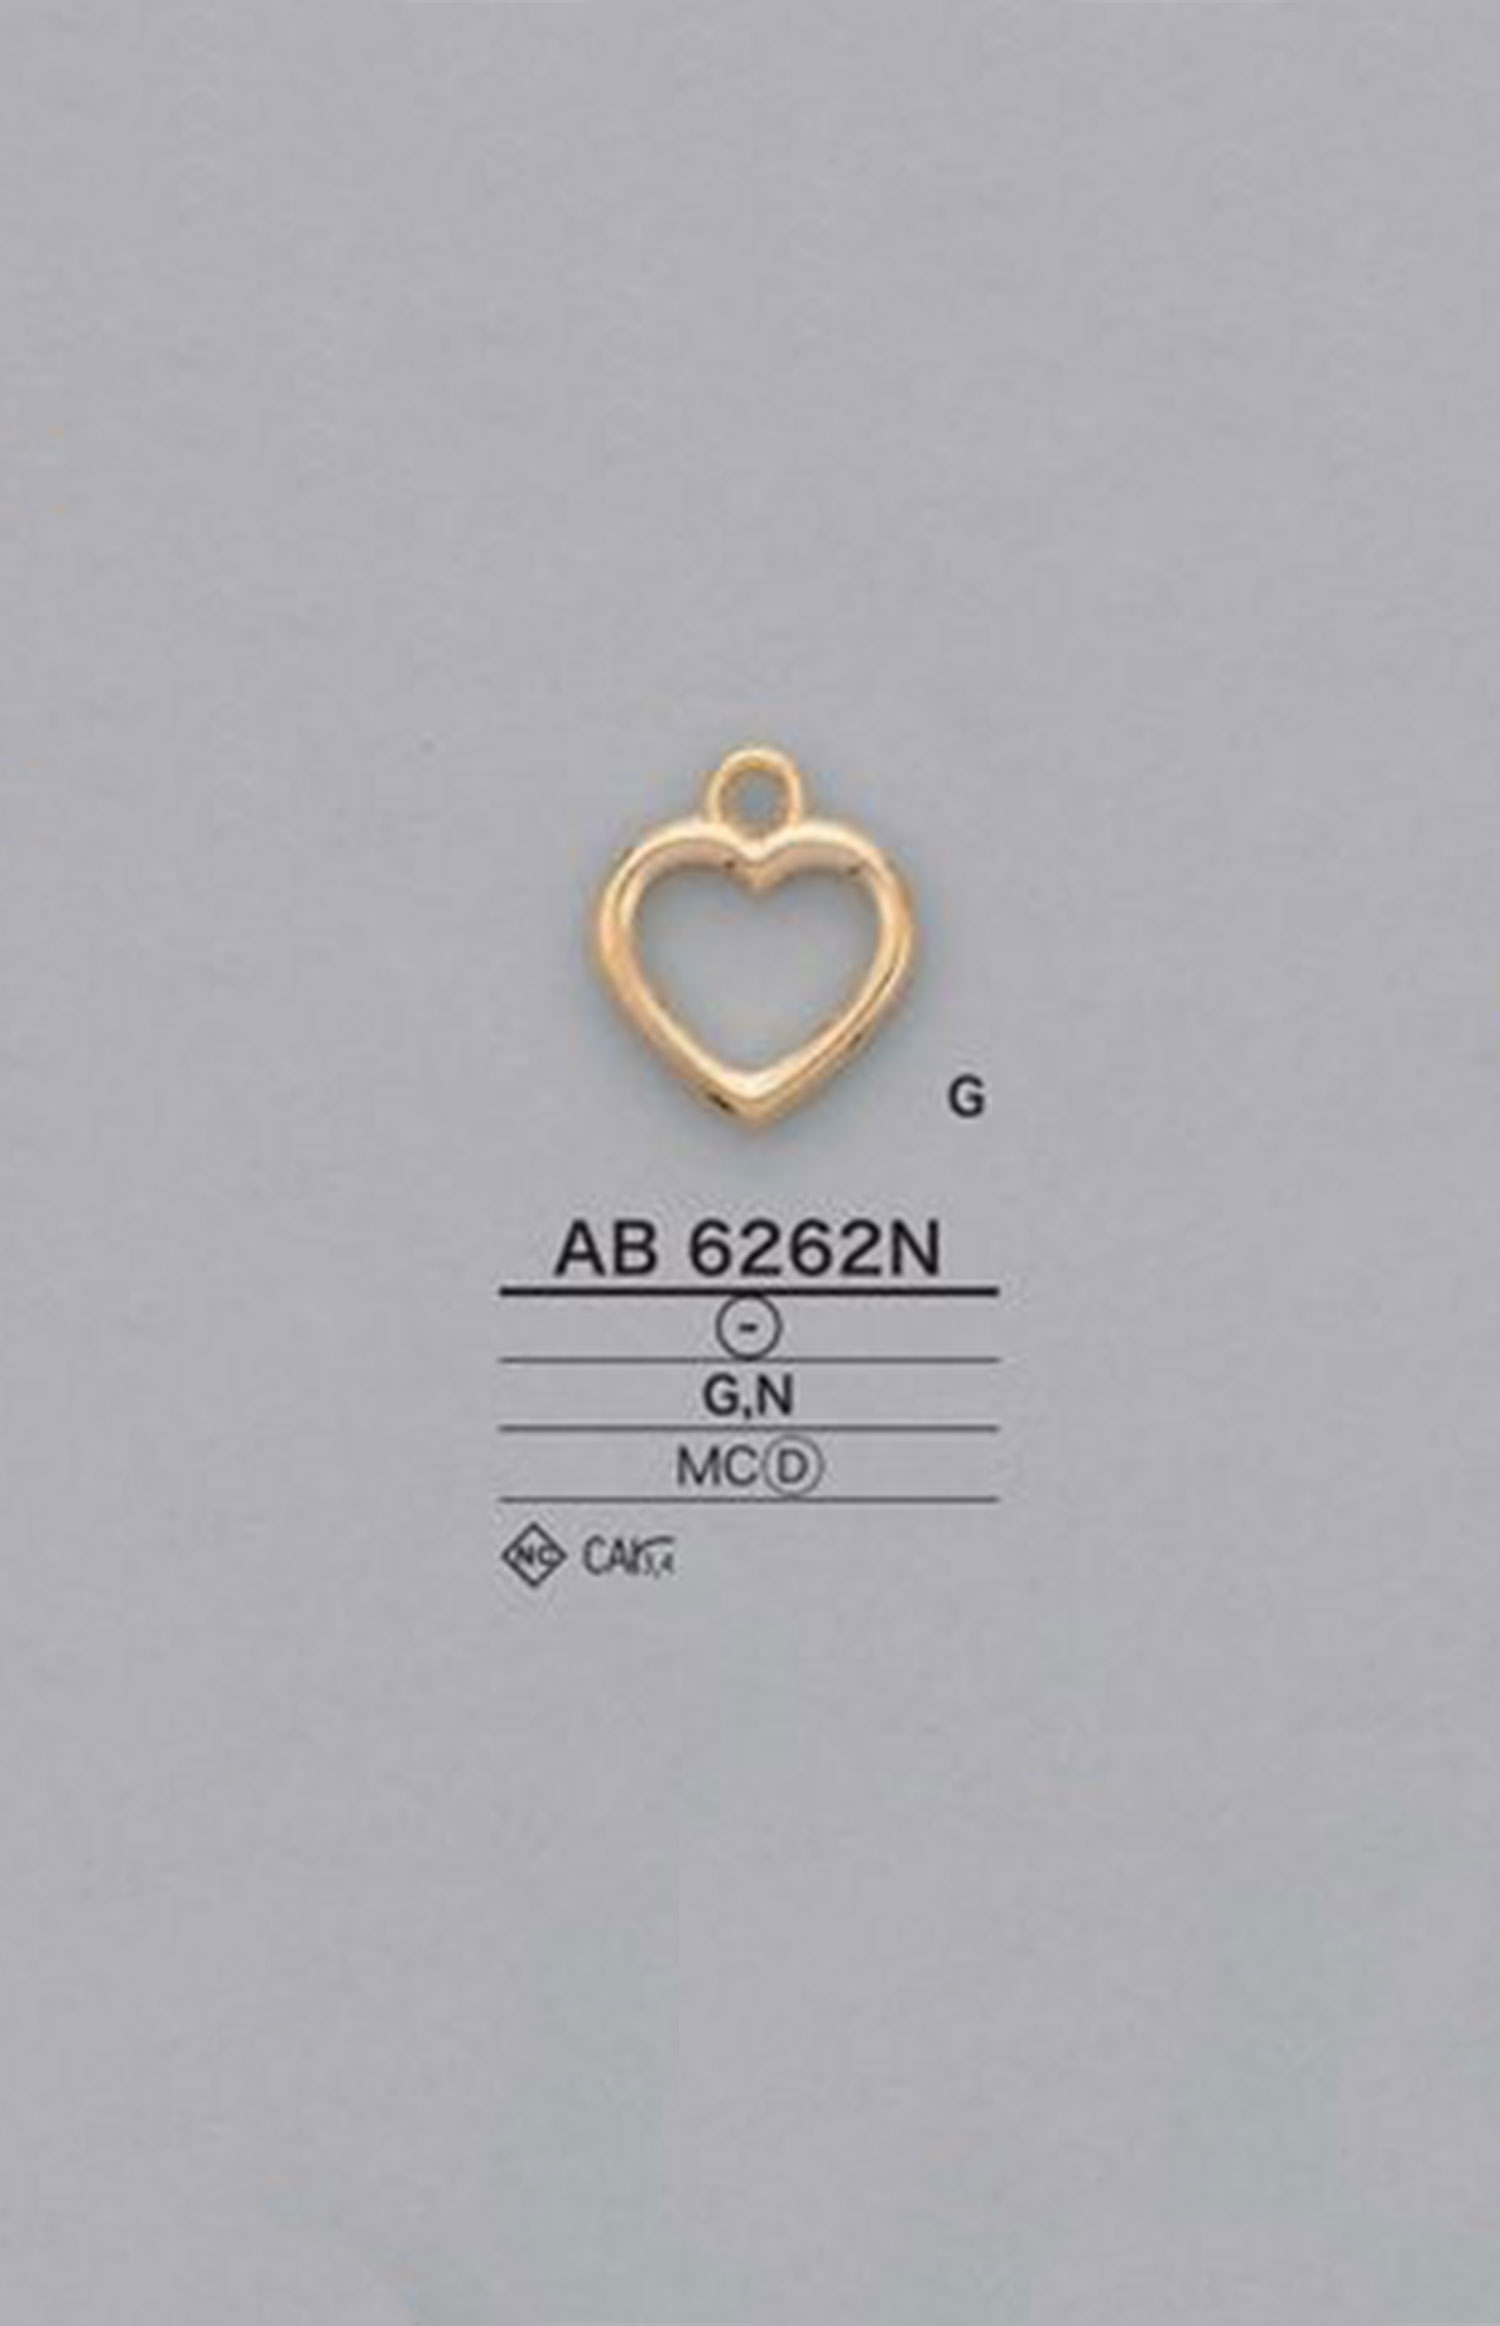 AB6262N Heart-shaped Zipper Point (Pull Tab) IRIS